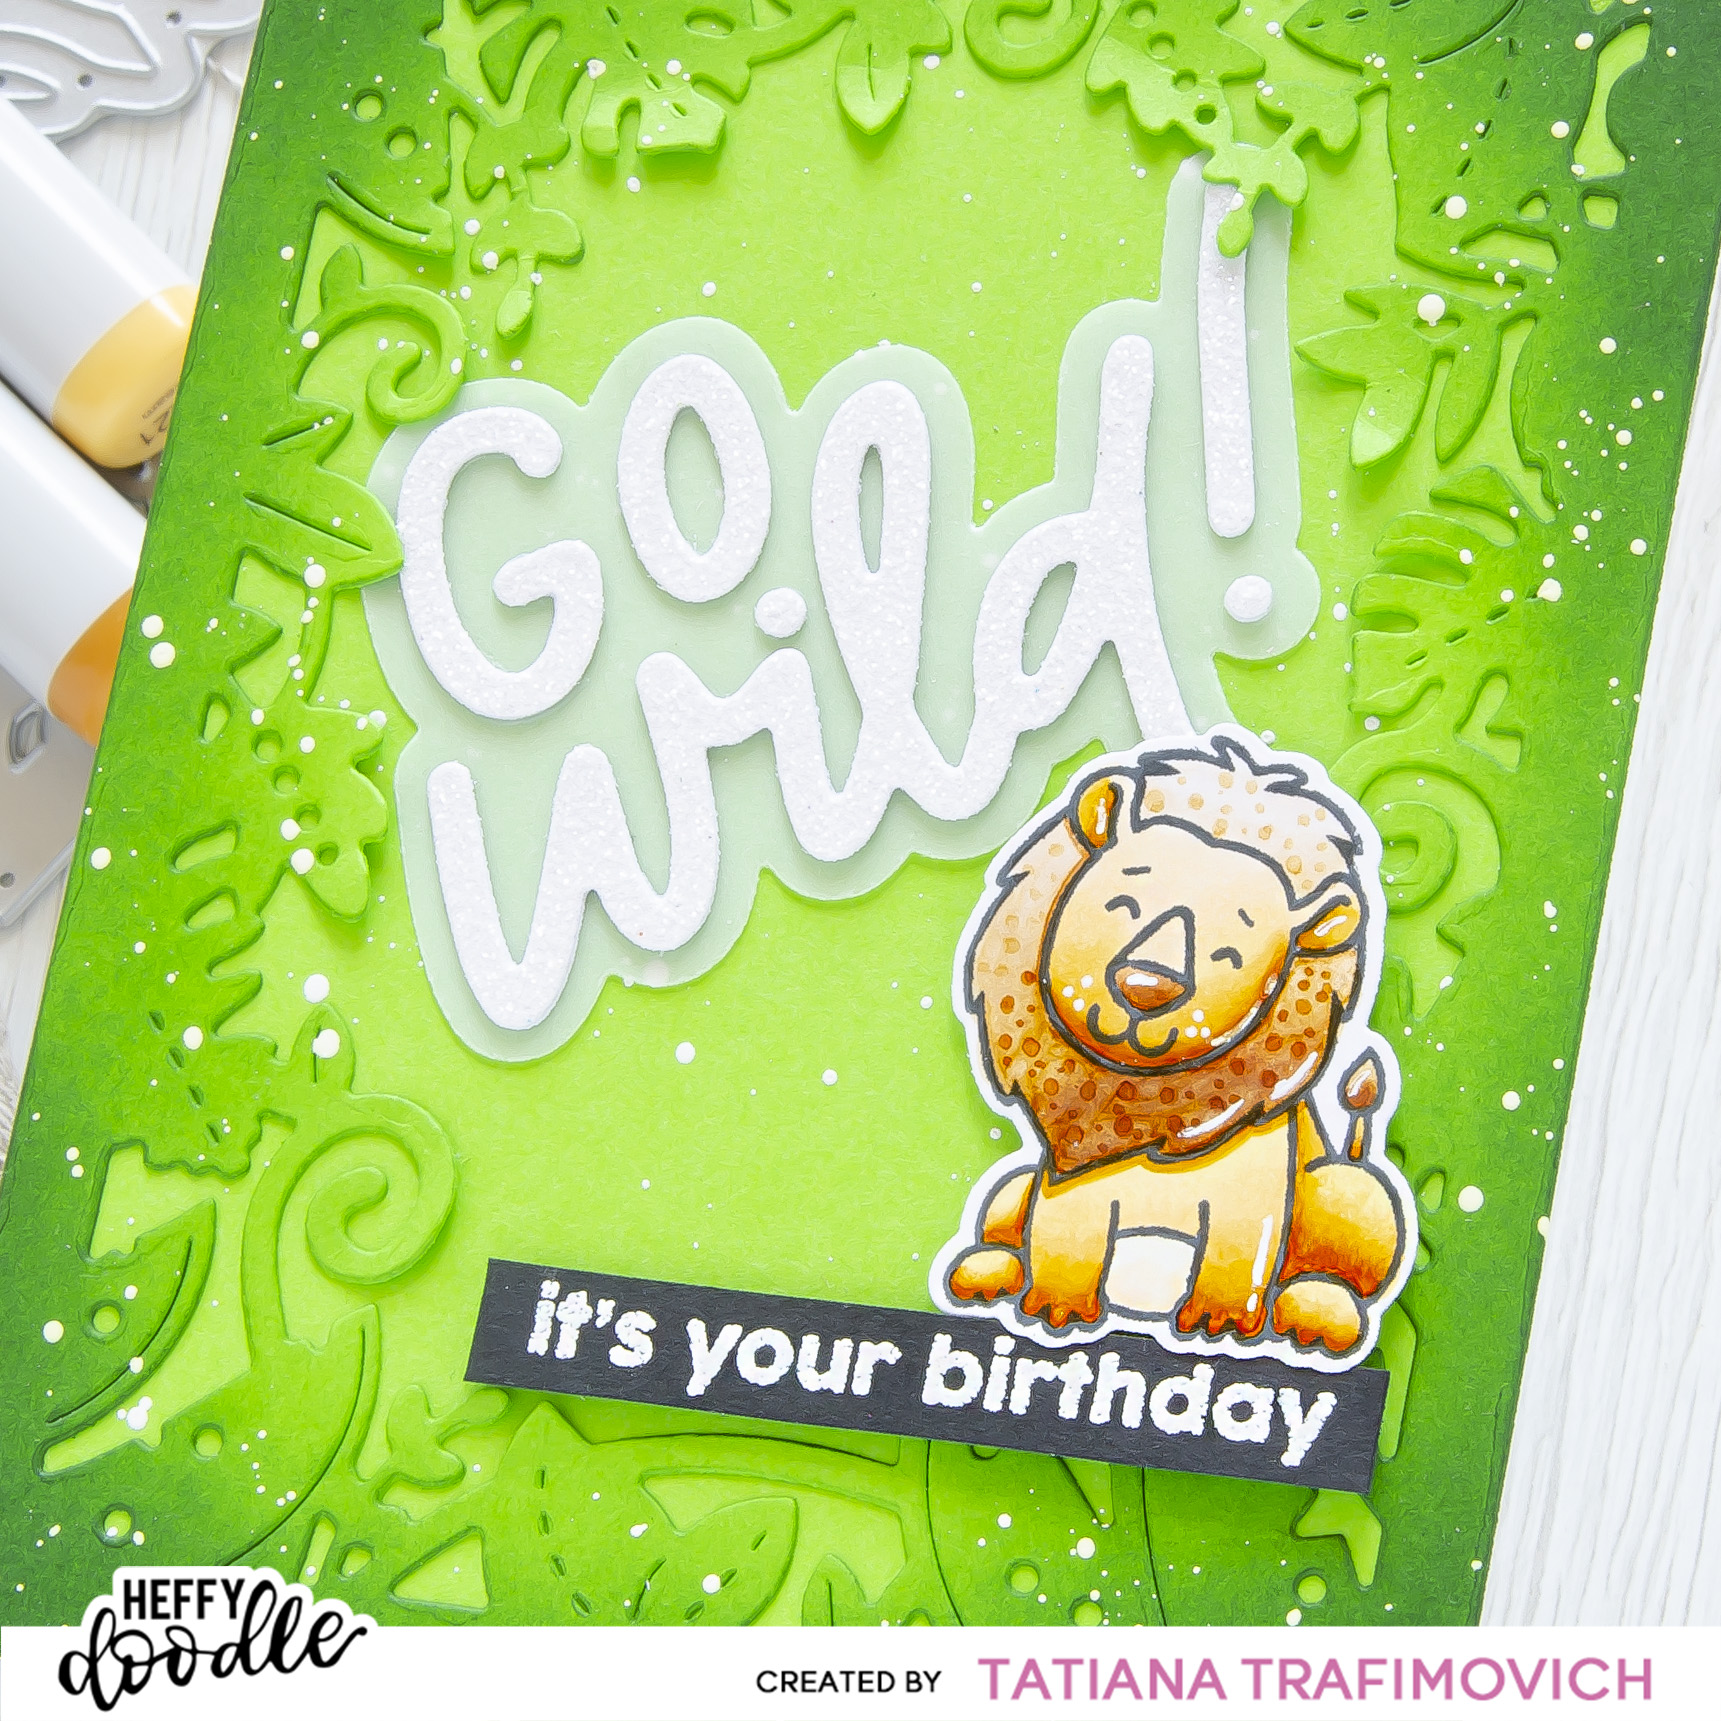 It's Your Birthday! Go Wild! #handmade card by Tatiana Trafimovich #tatianacraftandart - stamps and dies by Heffy Doodle #heffydoodle